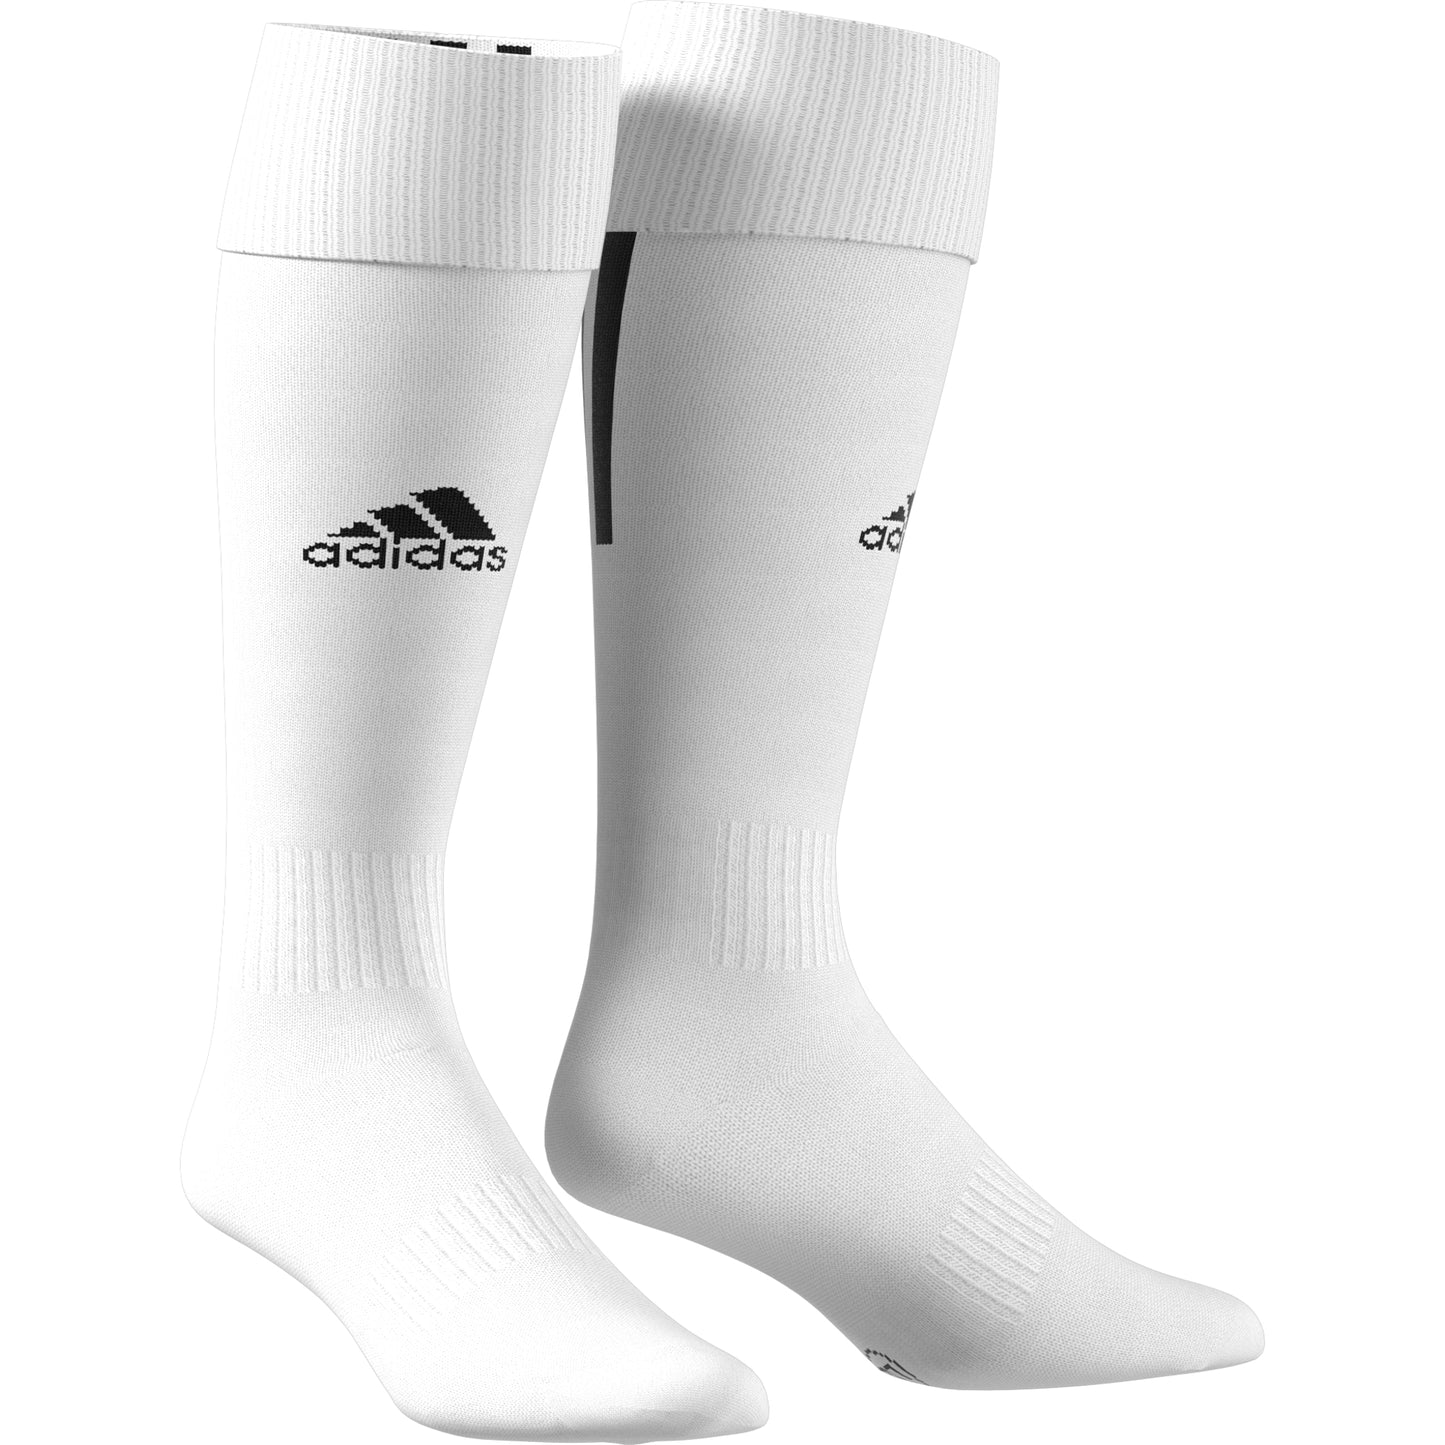 Adidas Santos 18 Socks